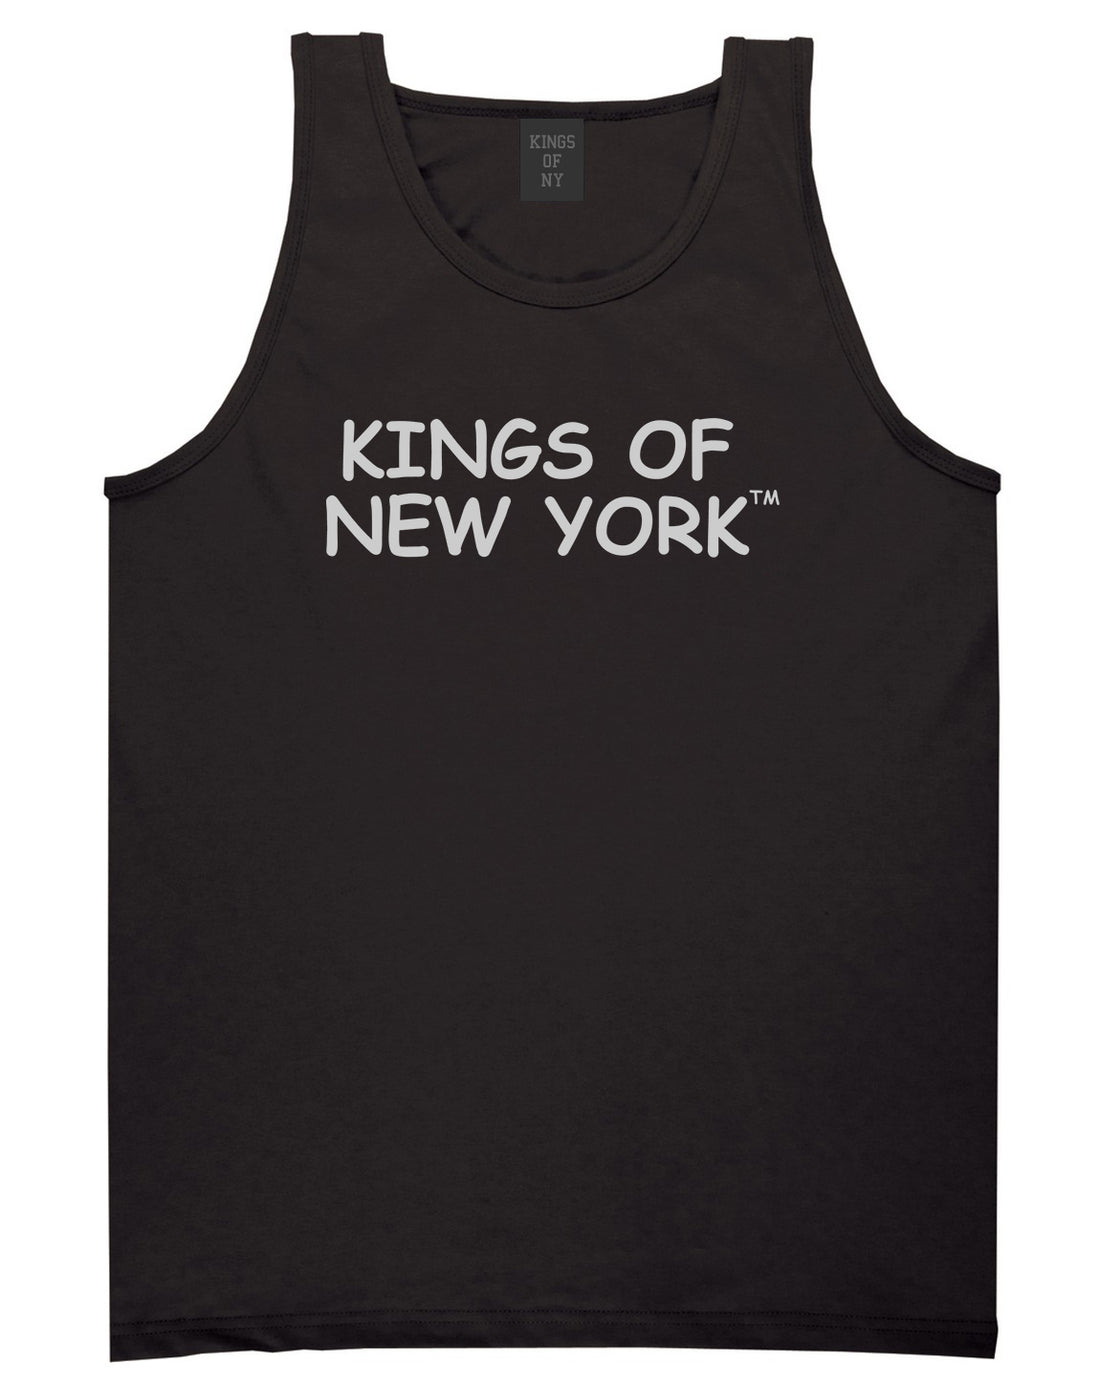 Kings Of New York TM Mens Tank Top T-Shirt Black